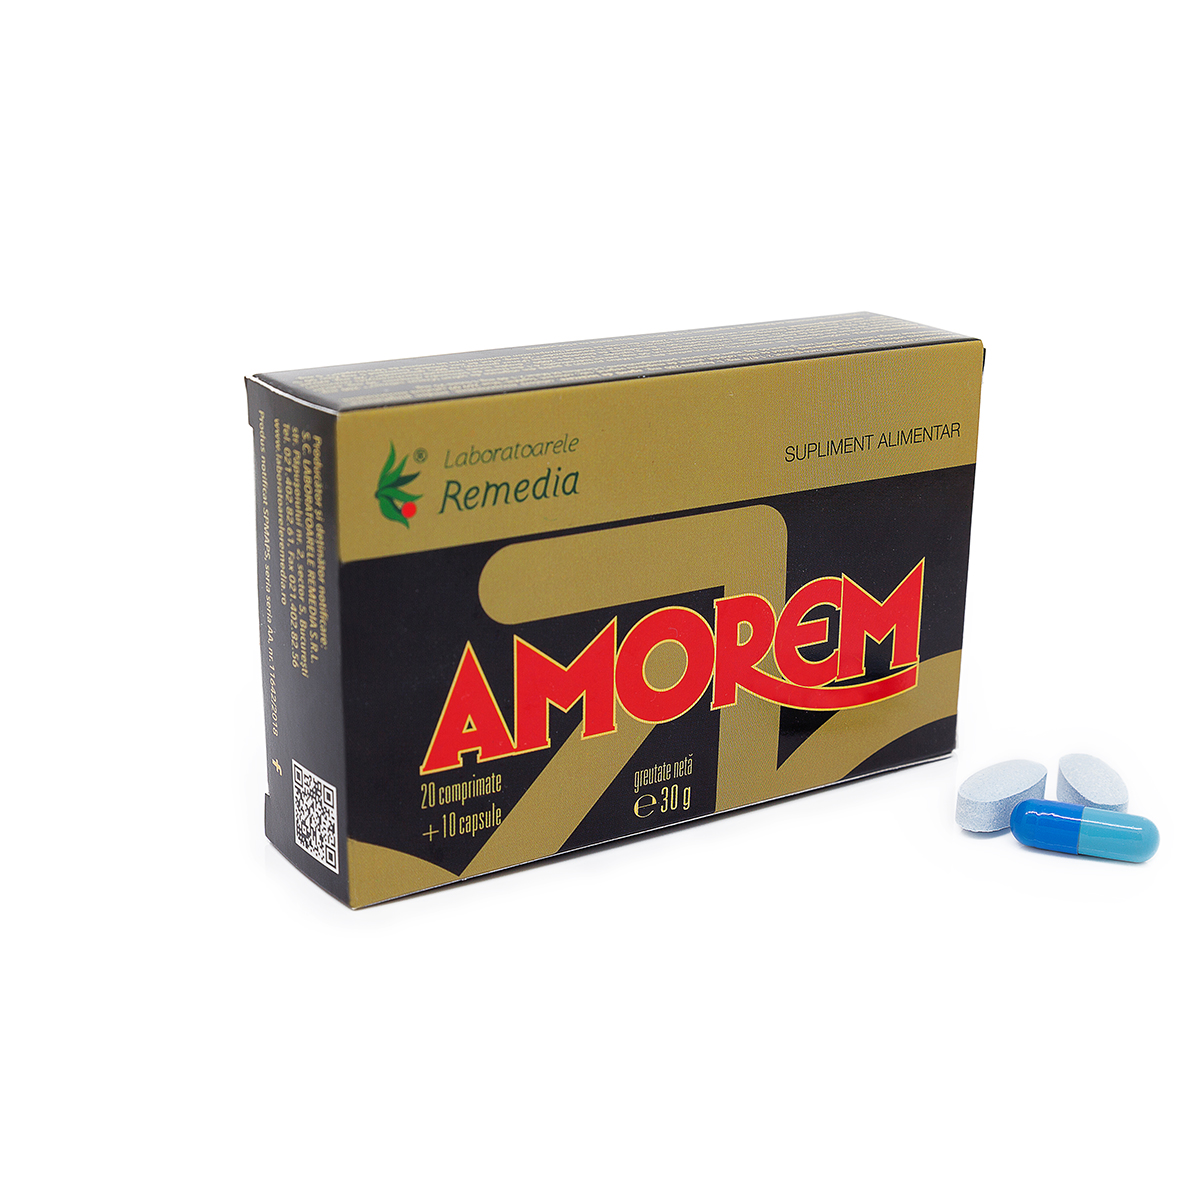 Amorem, 20 comprimate +10 capsule, Remedia